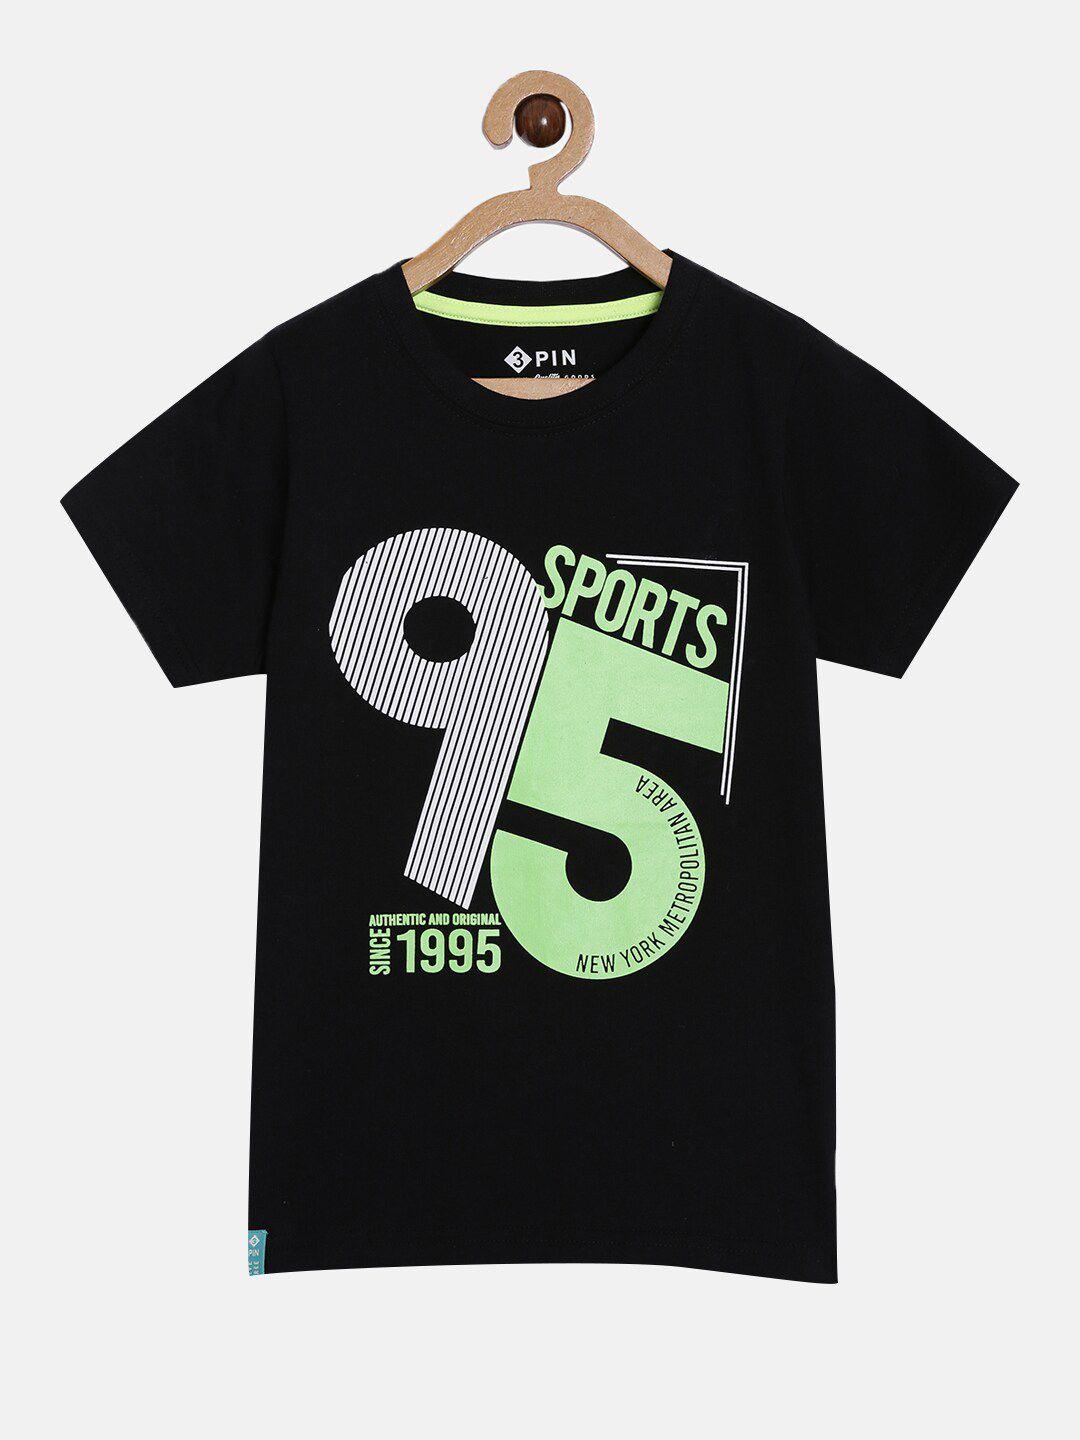 3pin boys black typography printed pure cotton t-shirt